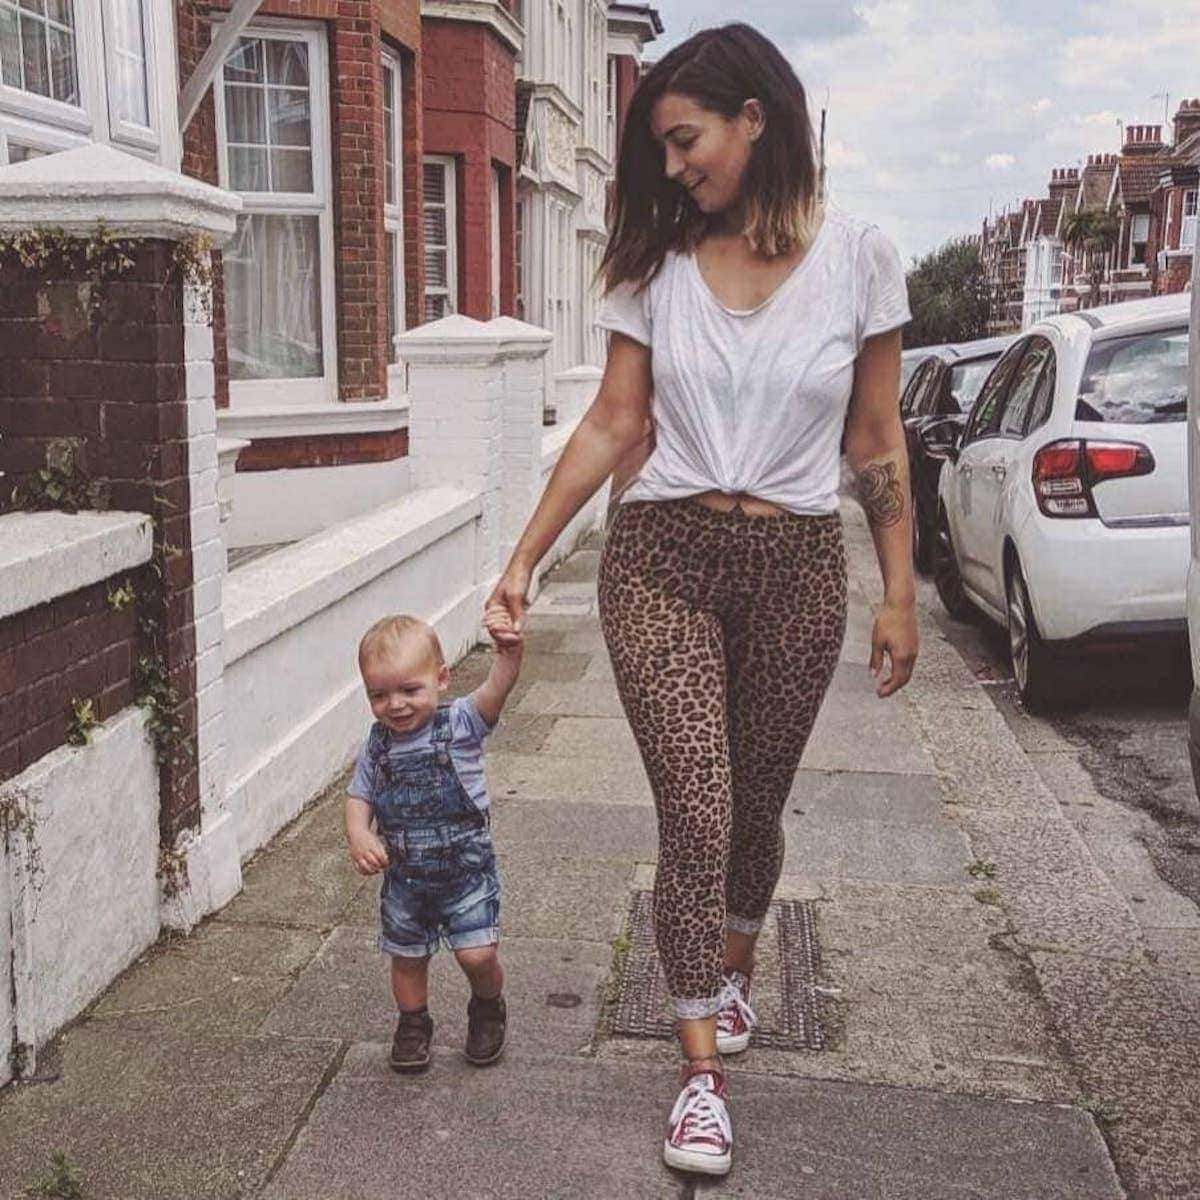 Yasmin and her son walking down the street, handing hand.